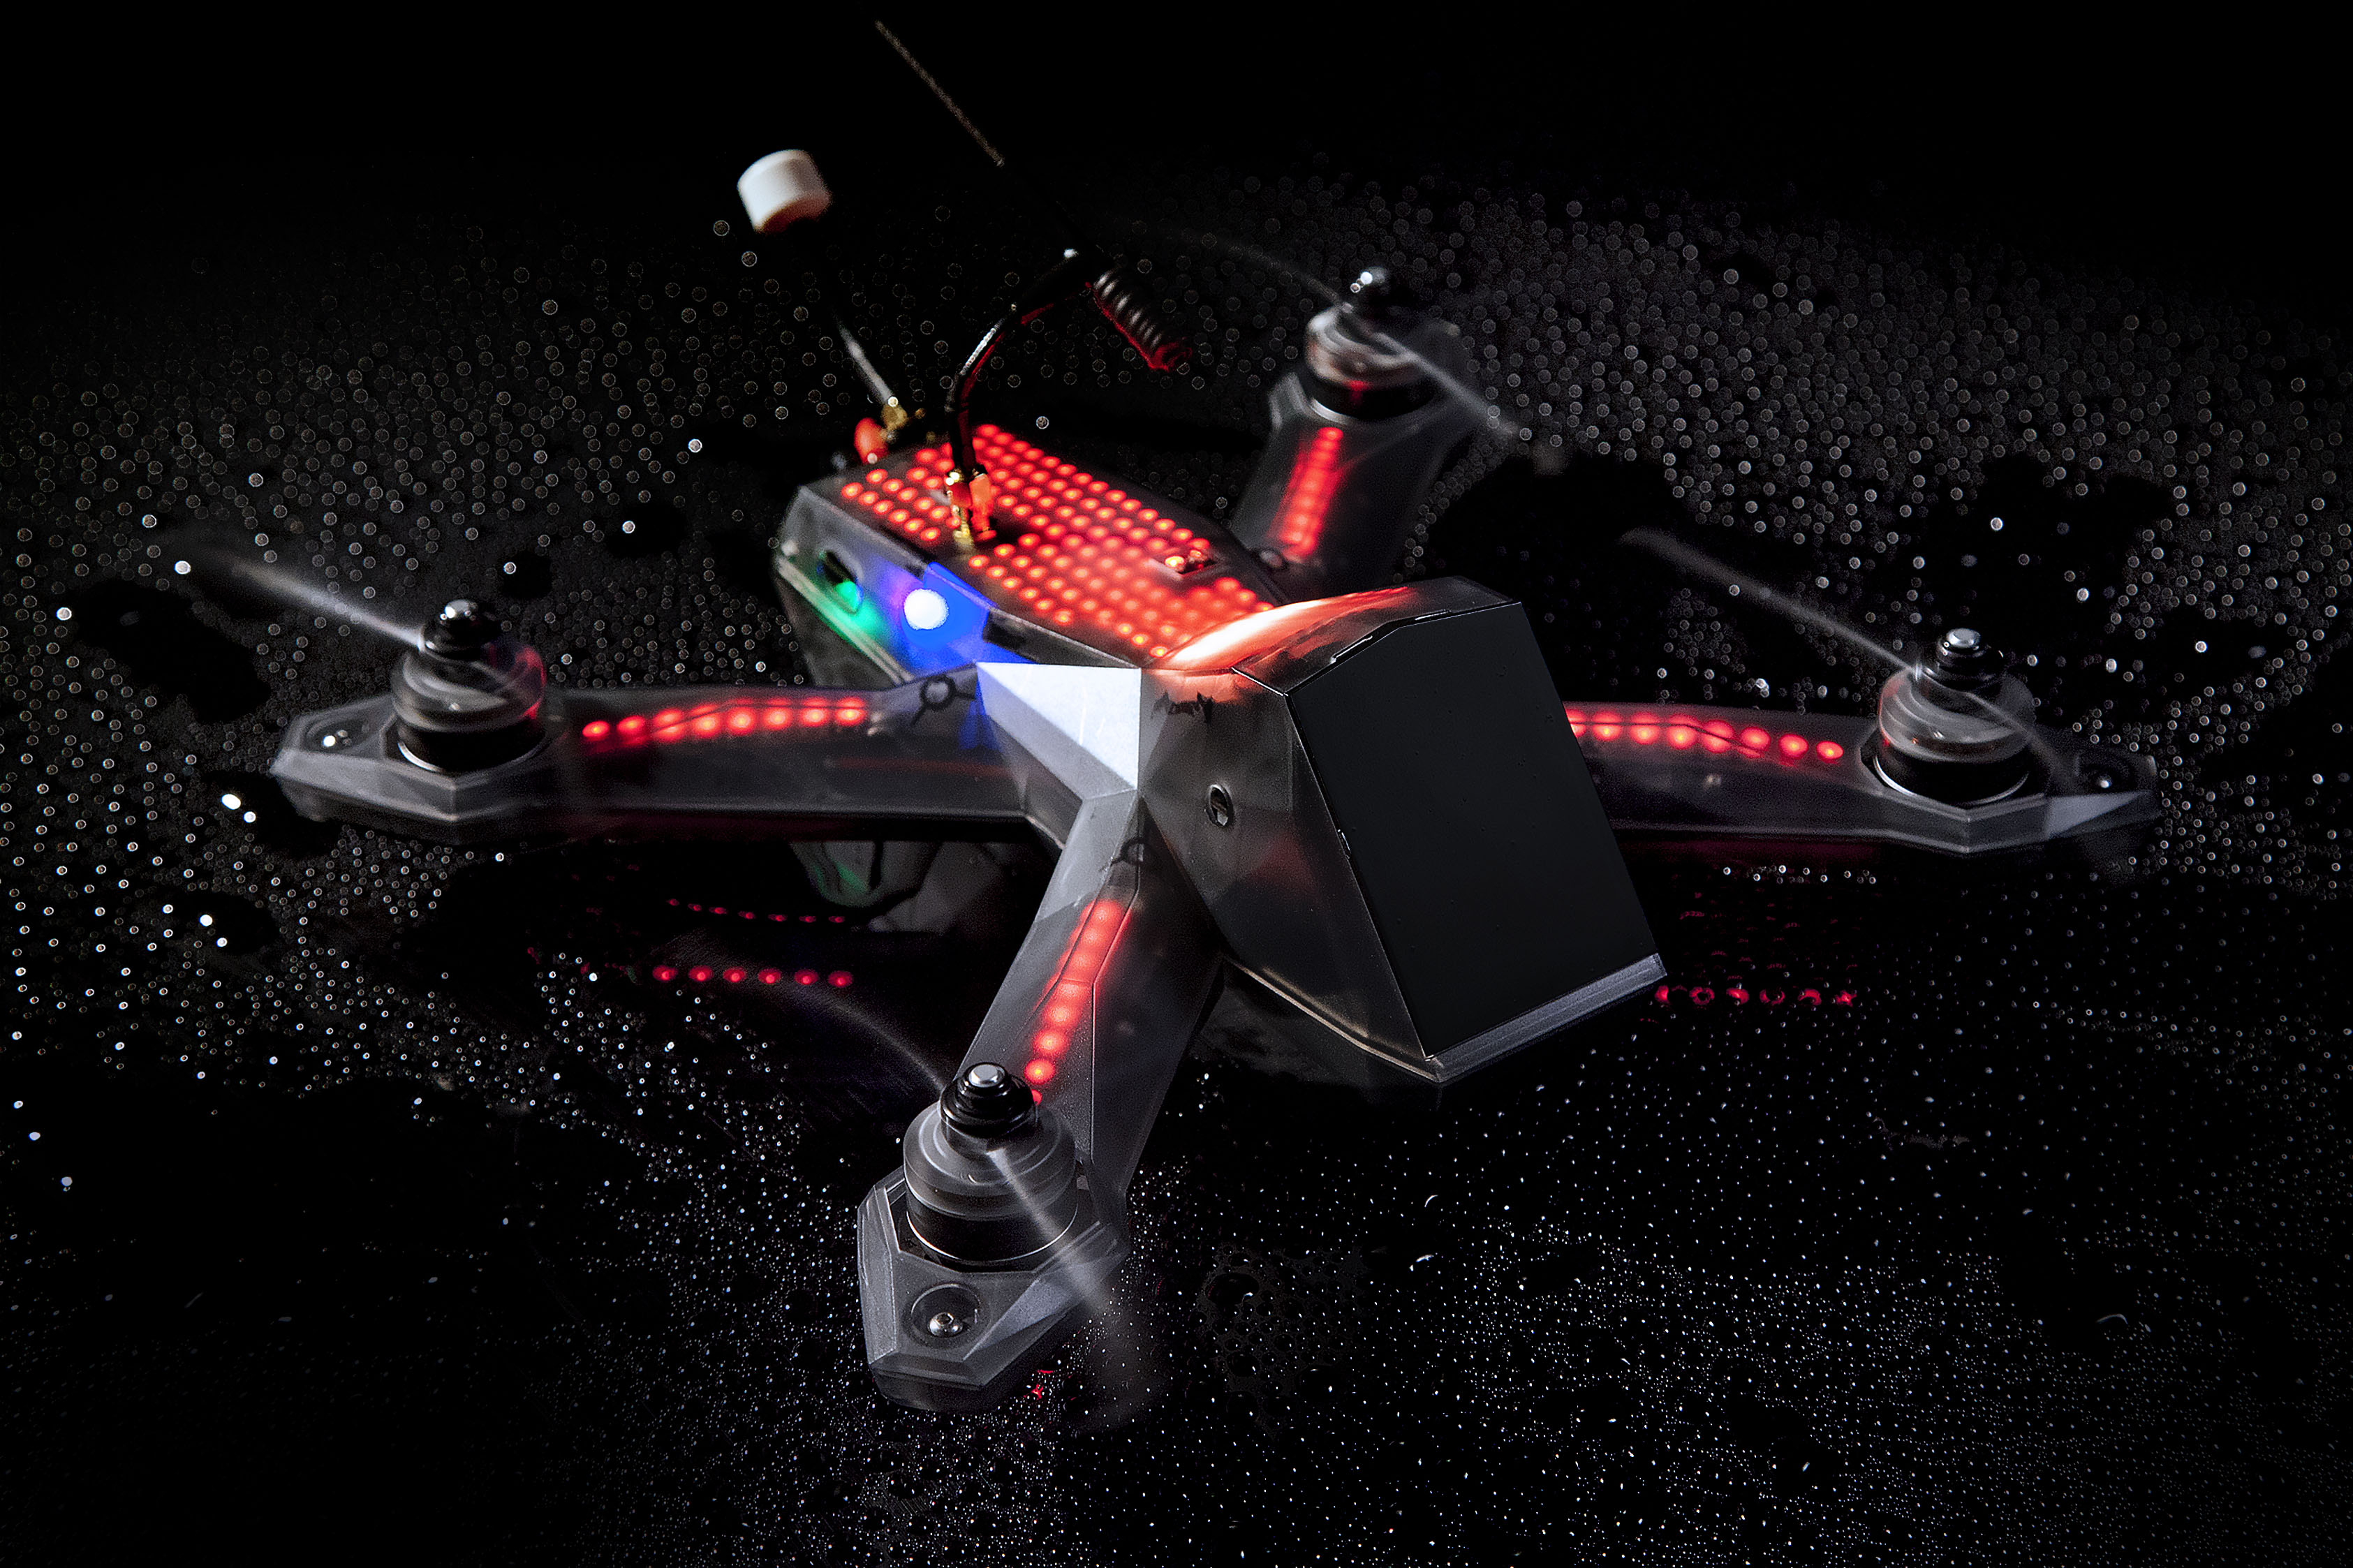 phoenix hd racing drone